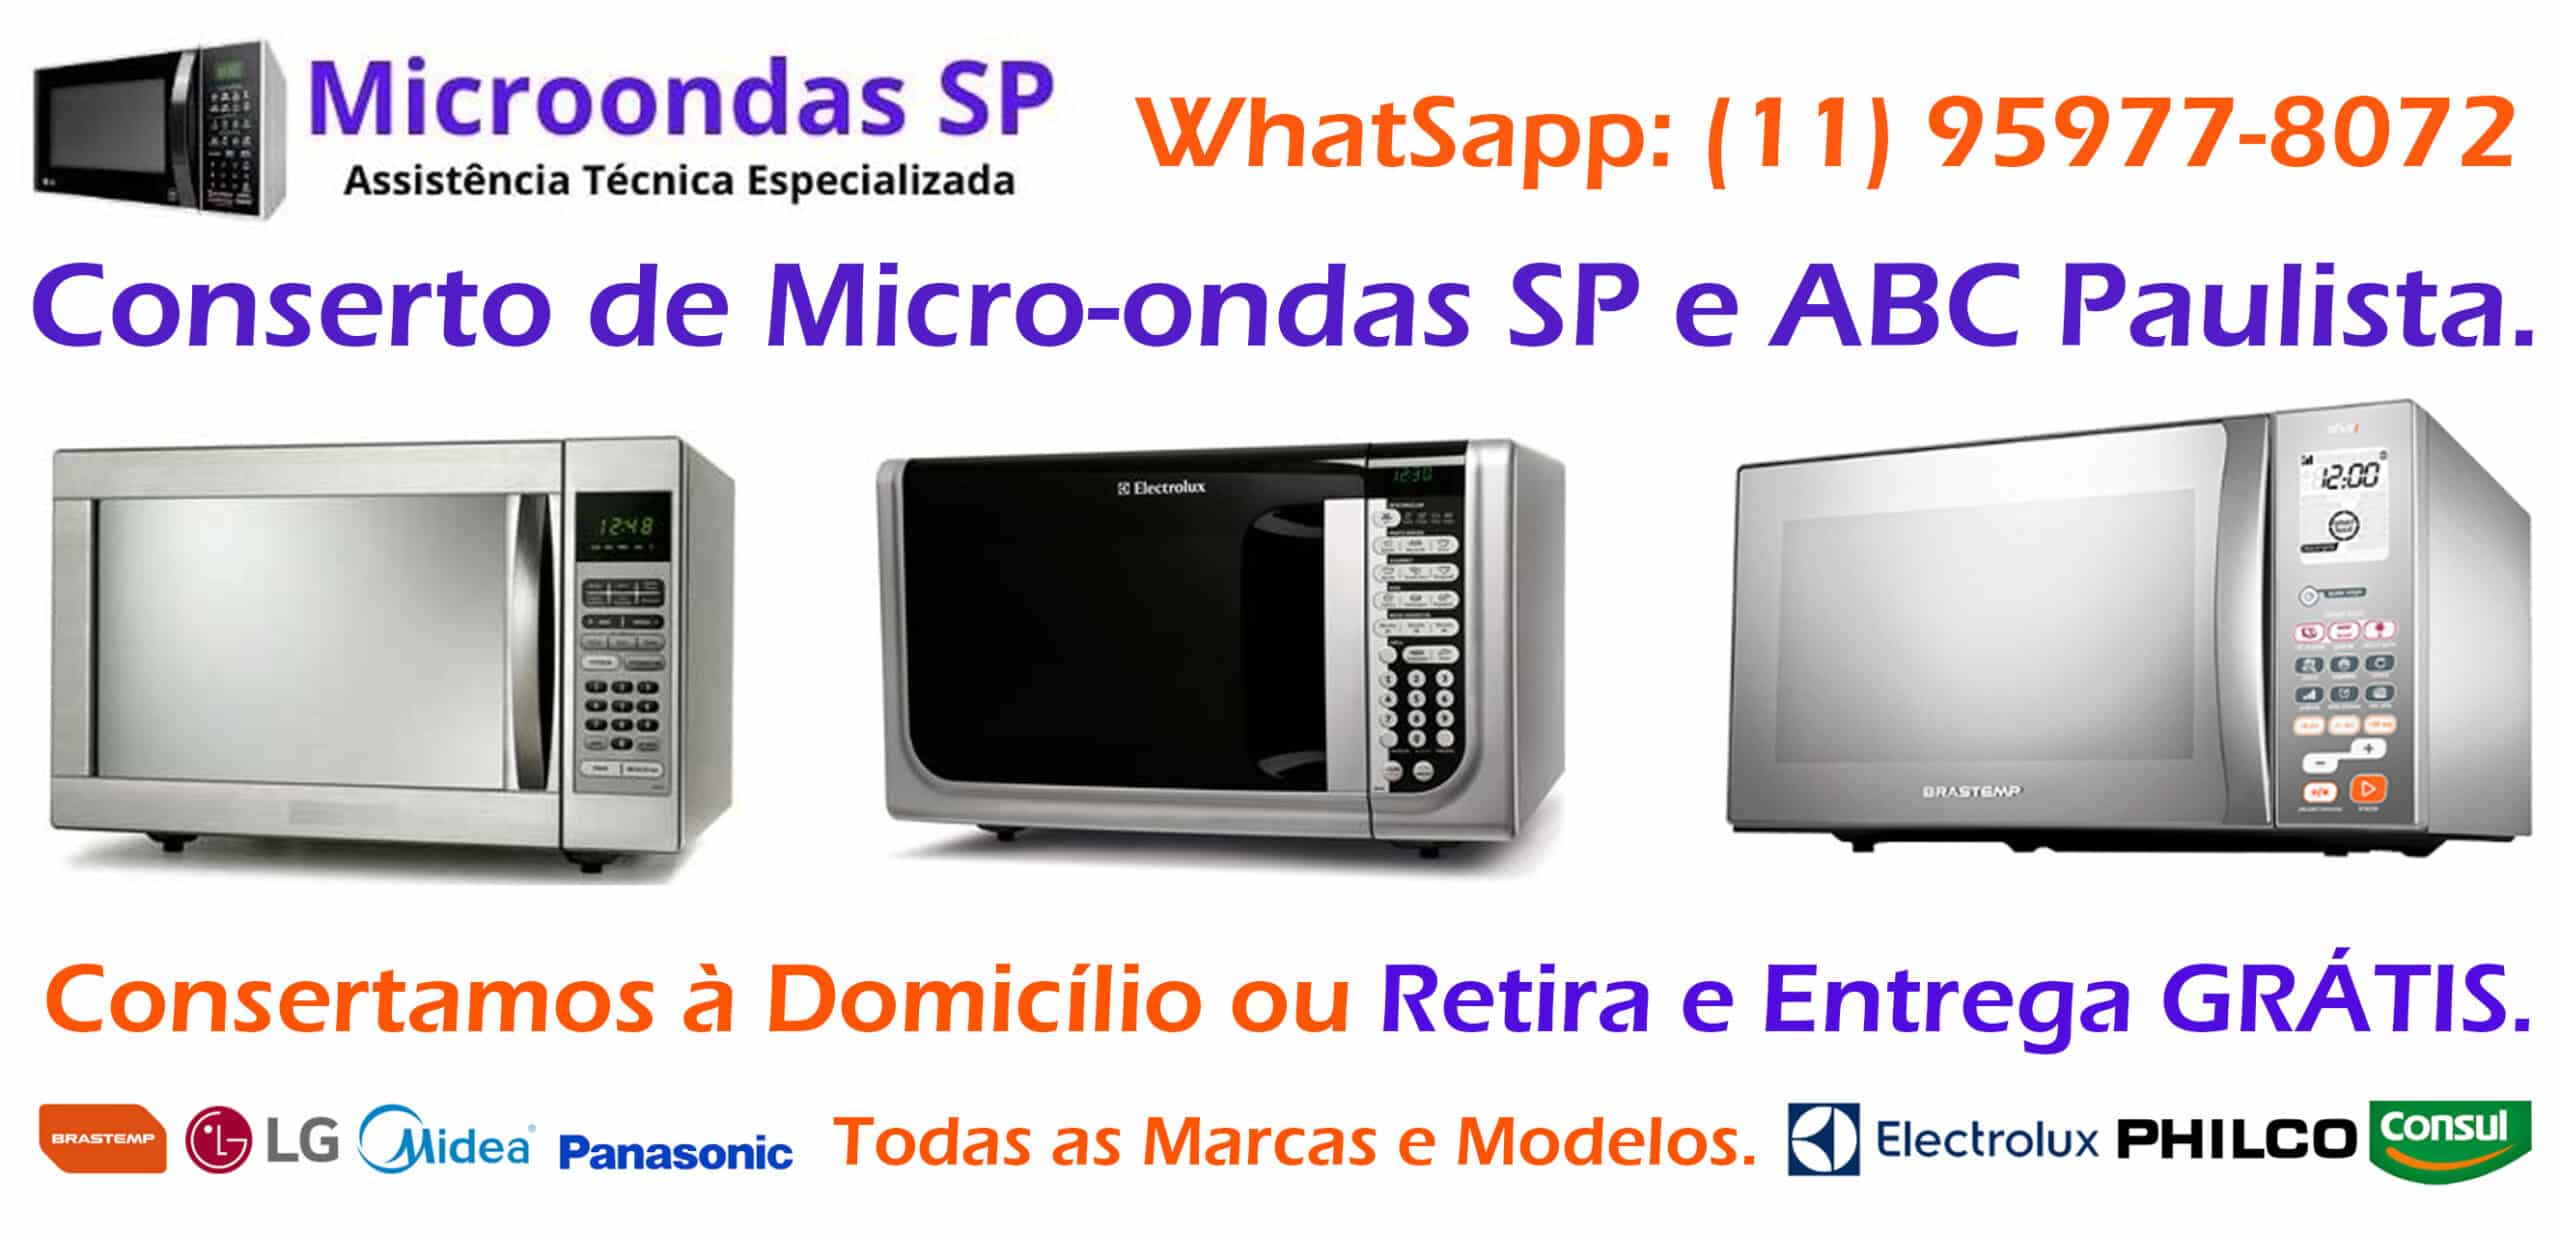 Conserto-Micro-ondas-SP-e-ABC-Paulista-scaled Conserto de Micro-ondas SP e ABC